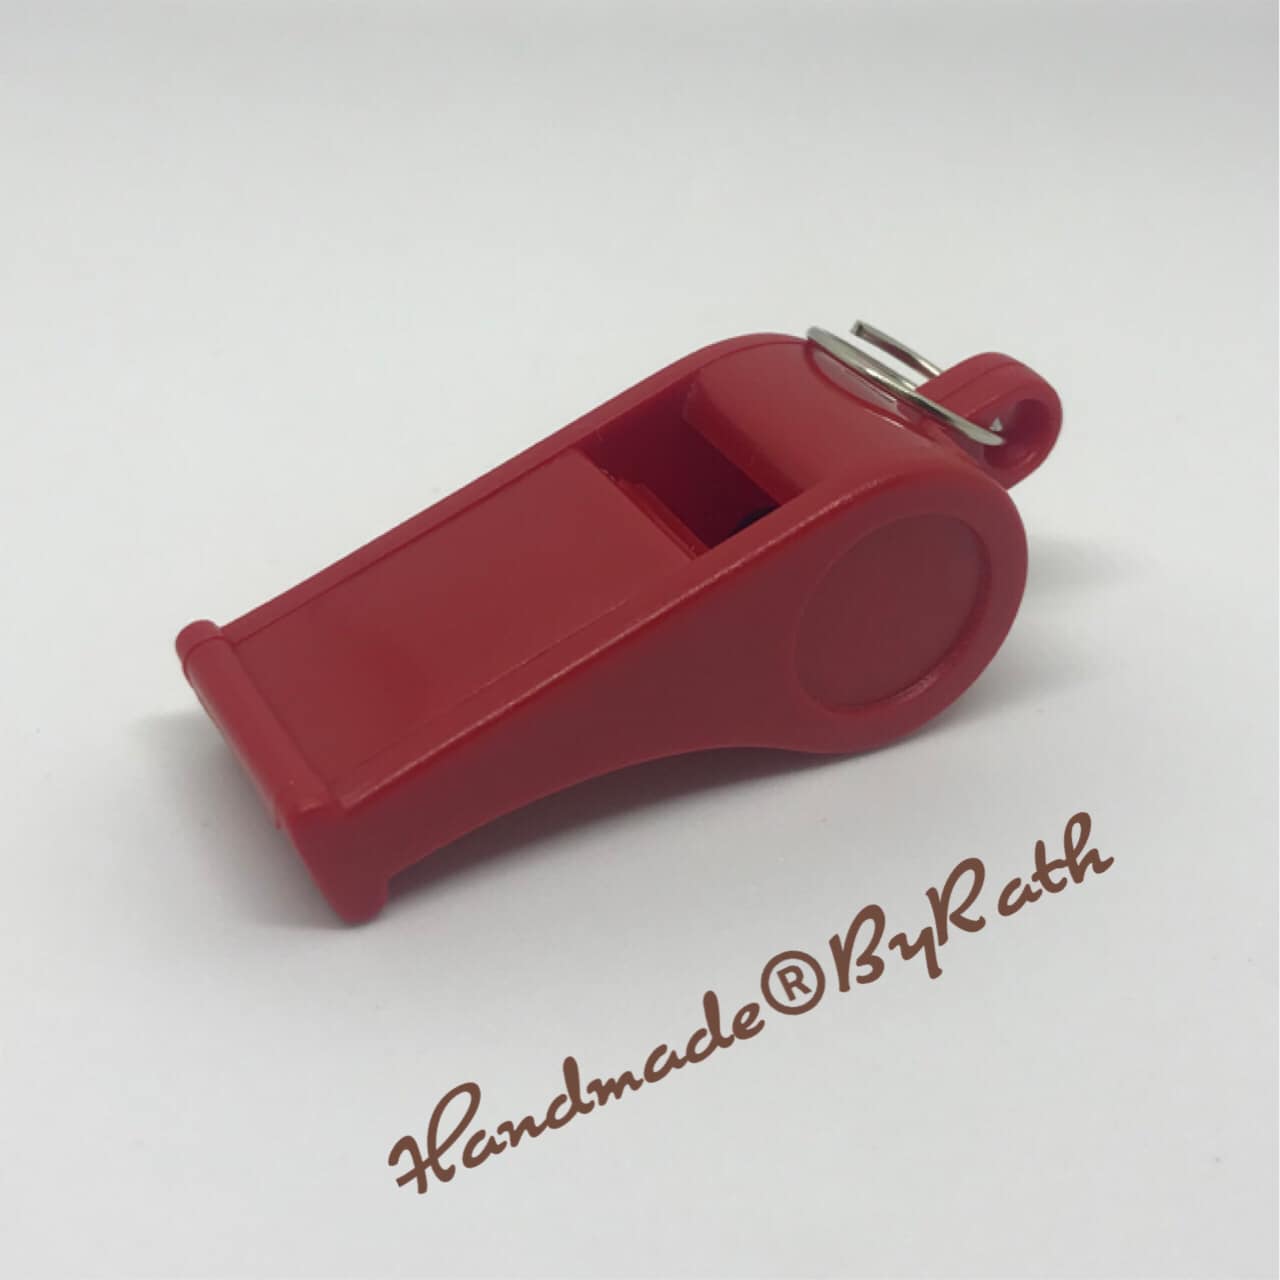 1 Pcs. นกหวีด Handmade®️ สีแดง พร้อมห่วง Whistle Handmade®️ Red color